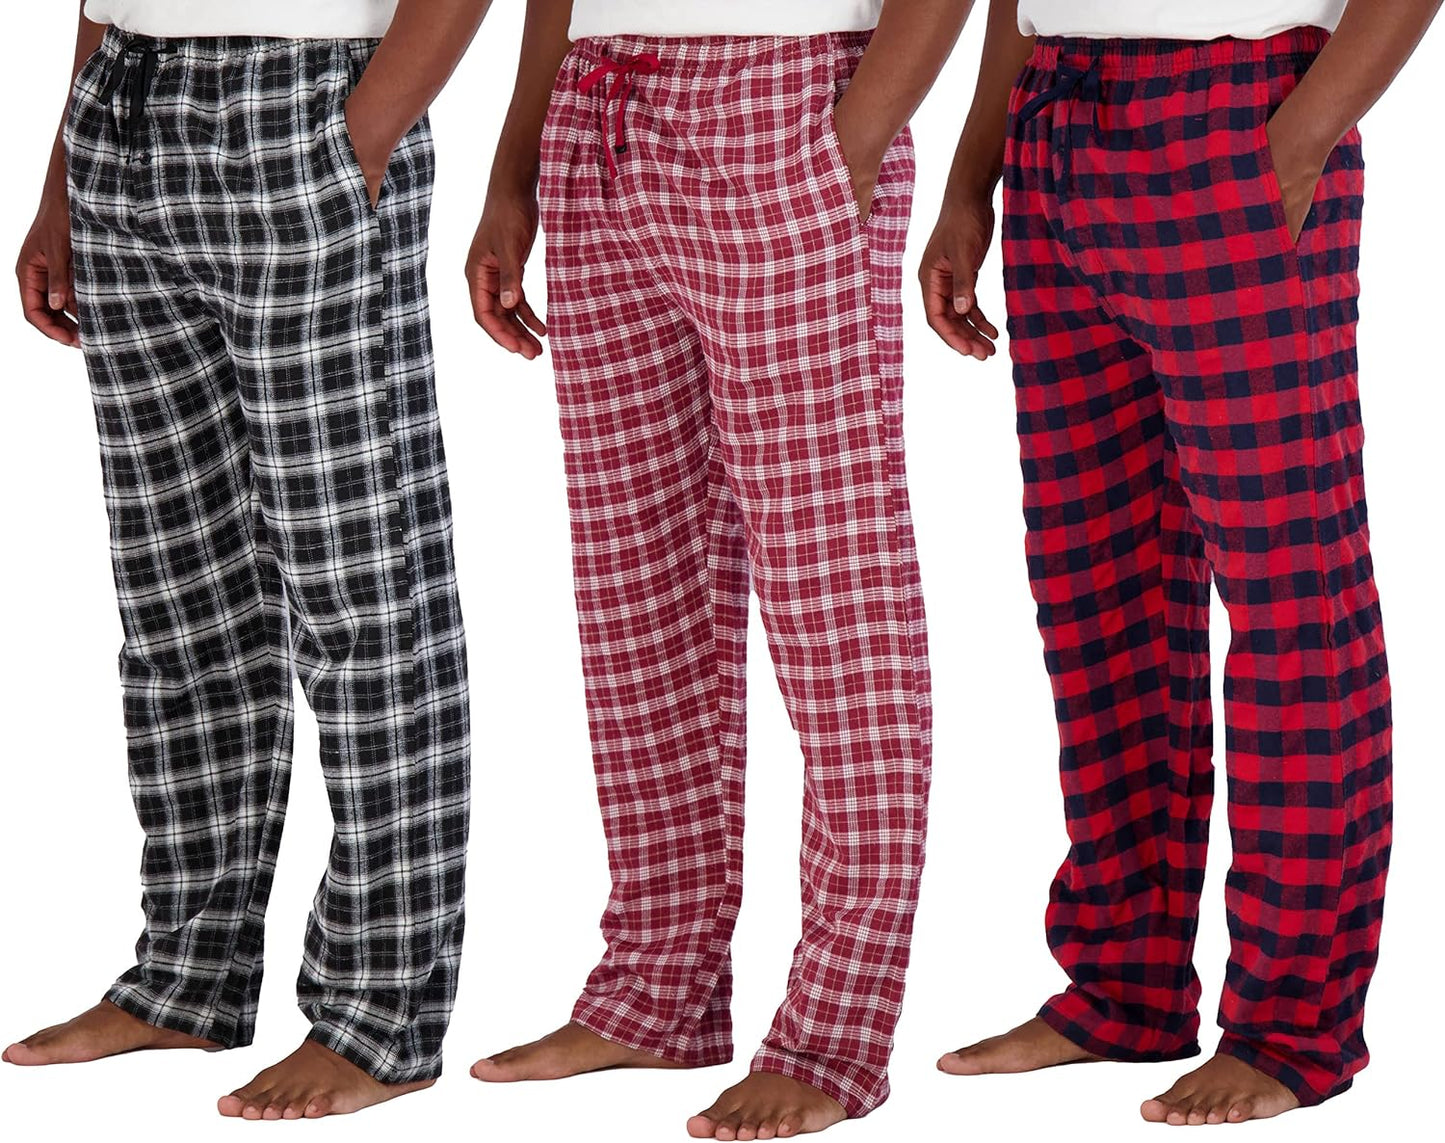 Red Pajama Bottoms: Shop at $21.00+